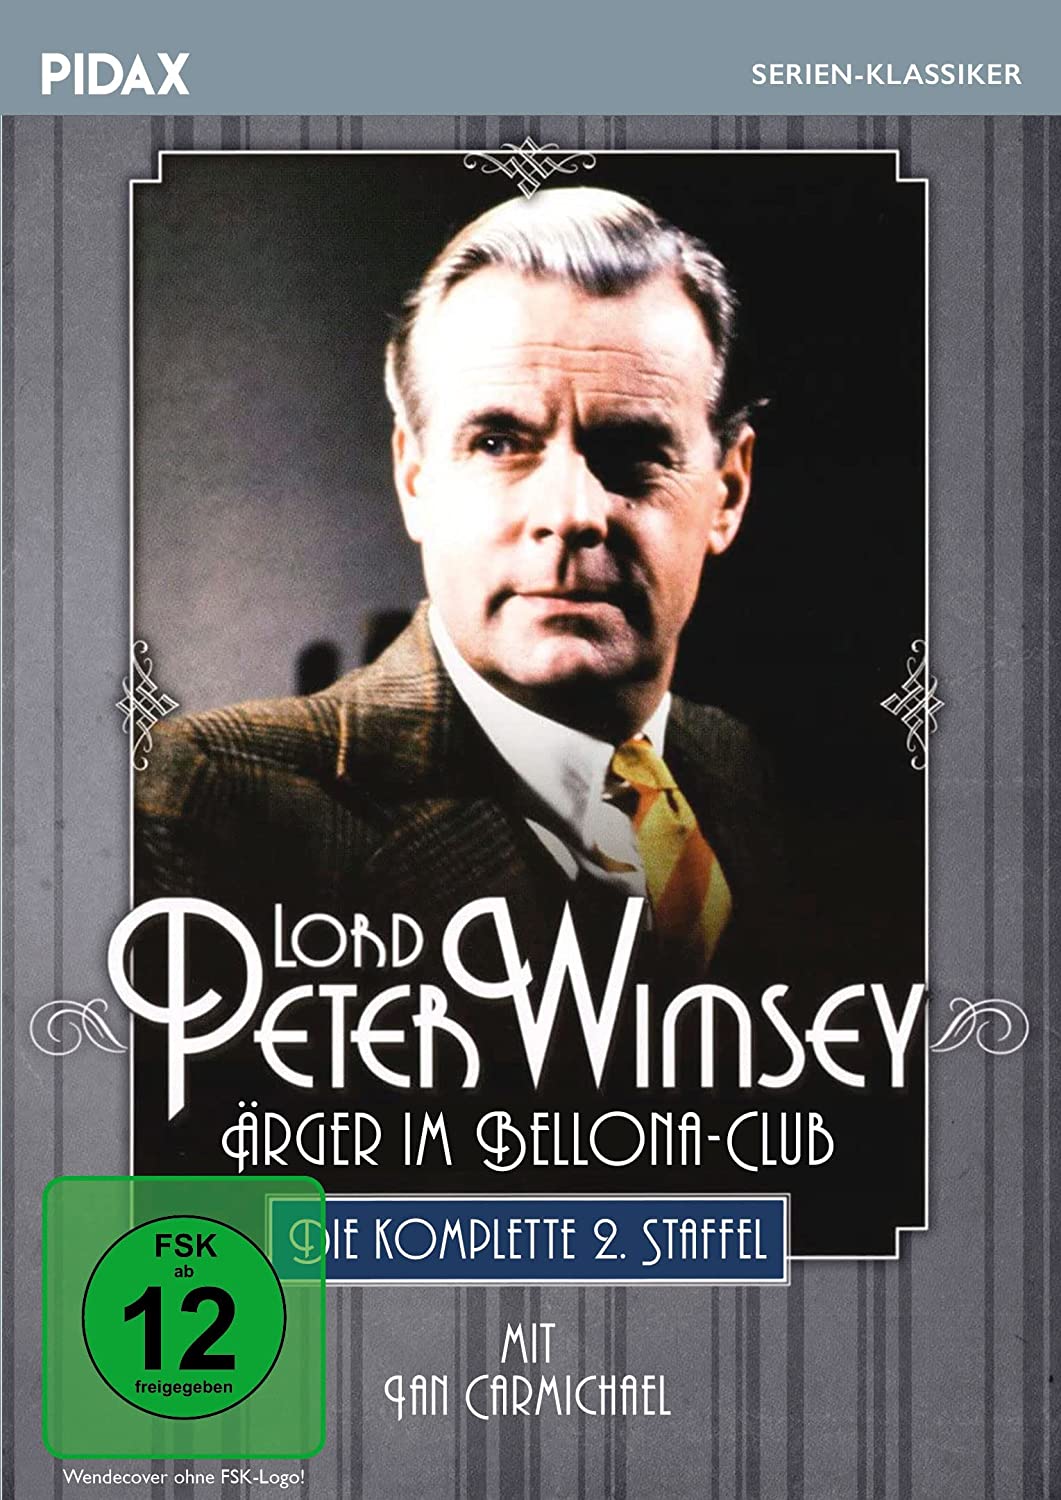 Lord Peter Wimsey, Staffel 2: Ärger im Bellona Club / Die komplette 2. Staffel